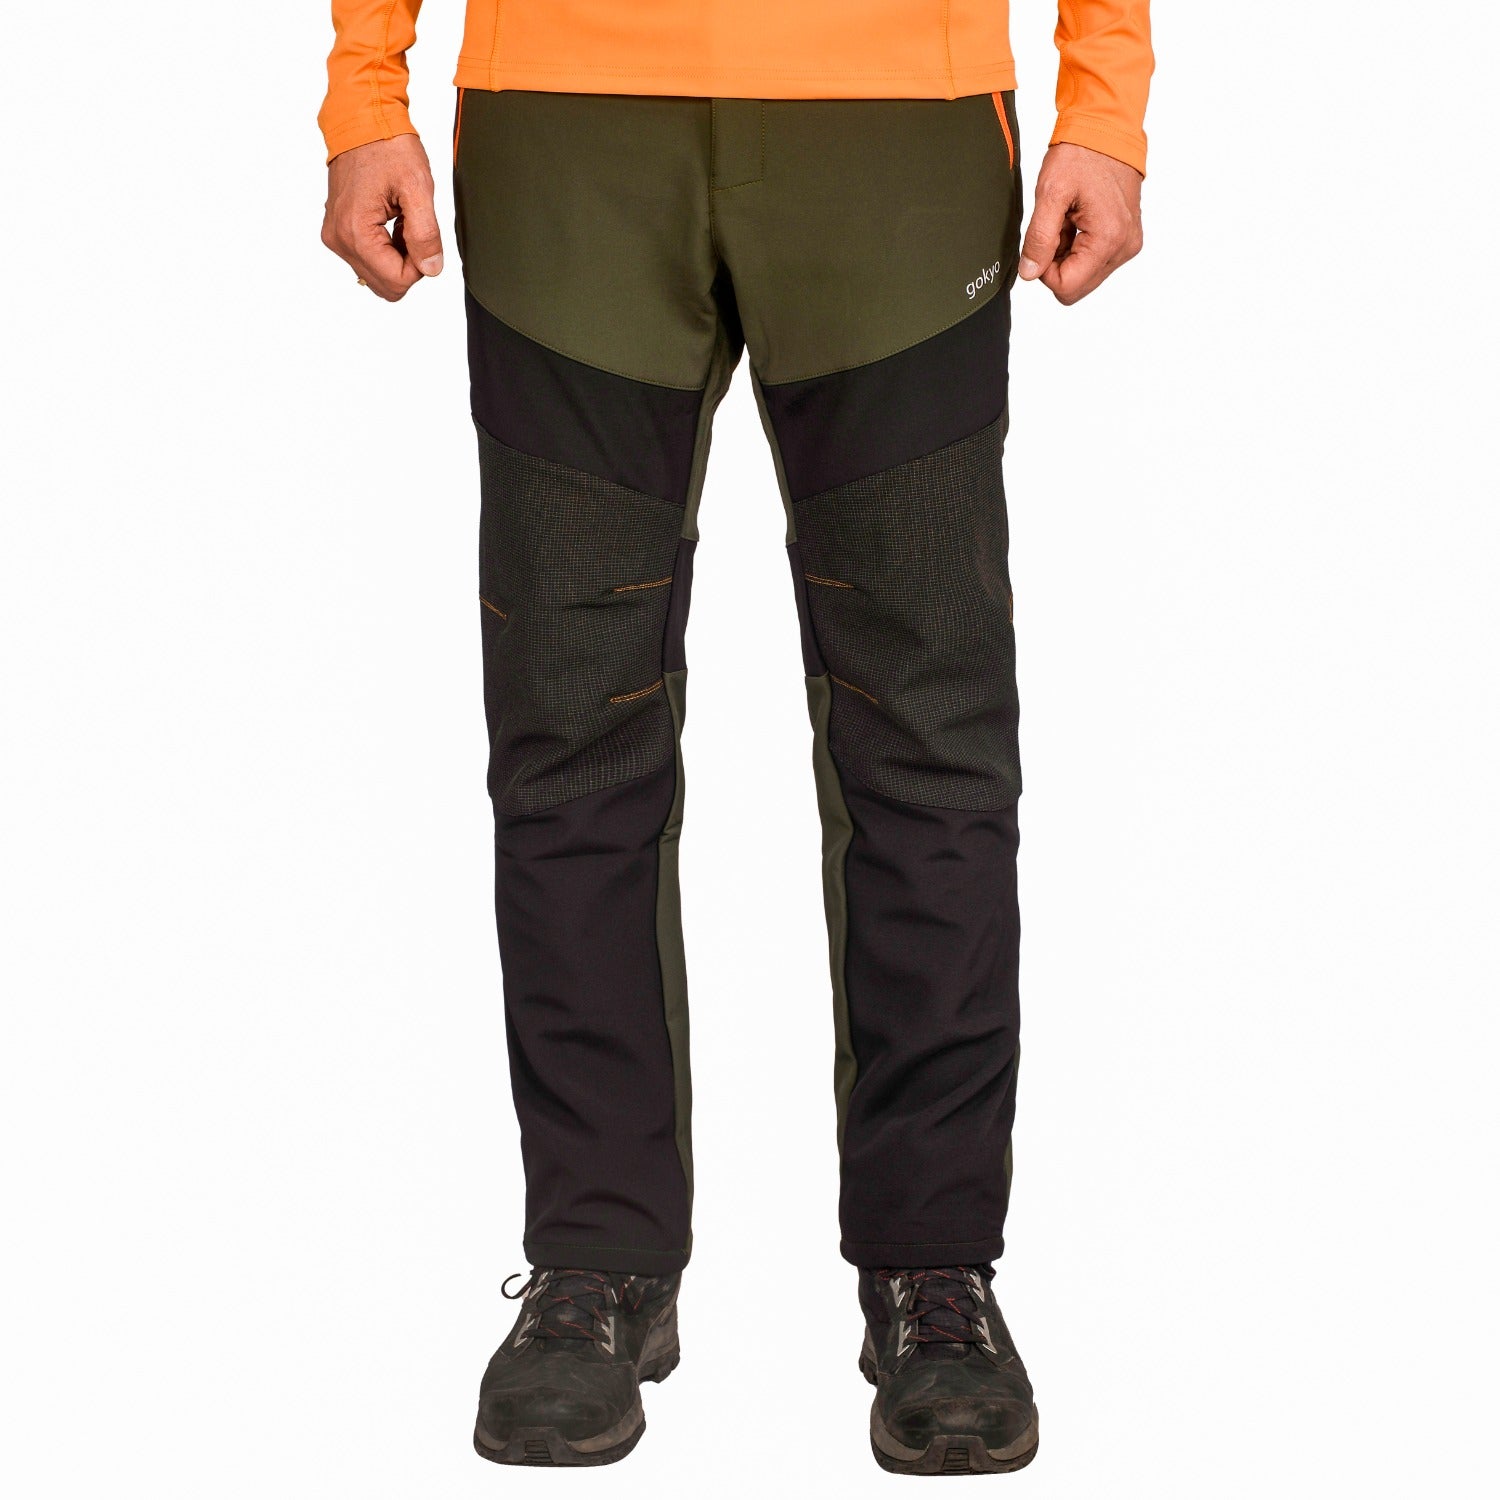 Buy Gokyo K2 Cold Weather Trekking & Outdoor Sherpa Pants Olive | Trekking & Hiking Pants at Gokyo Outdoor Clothing & Gear